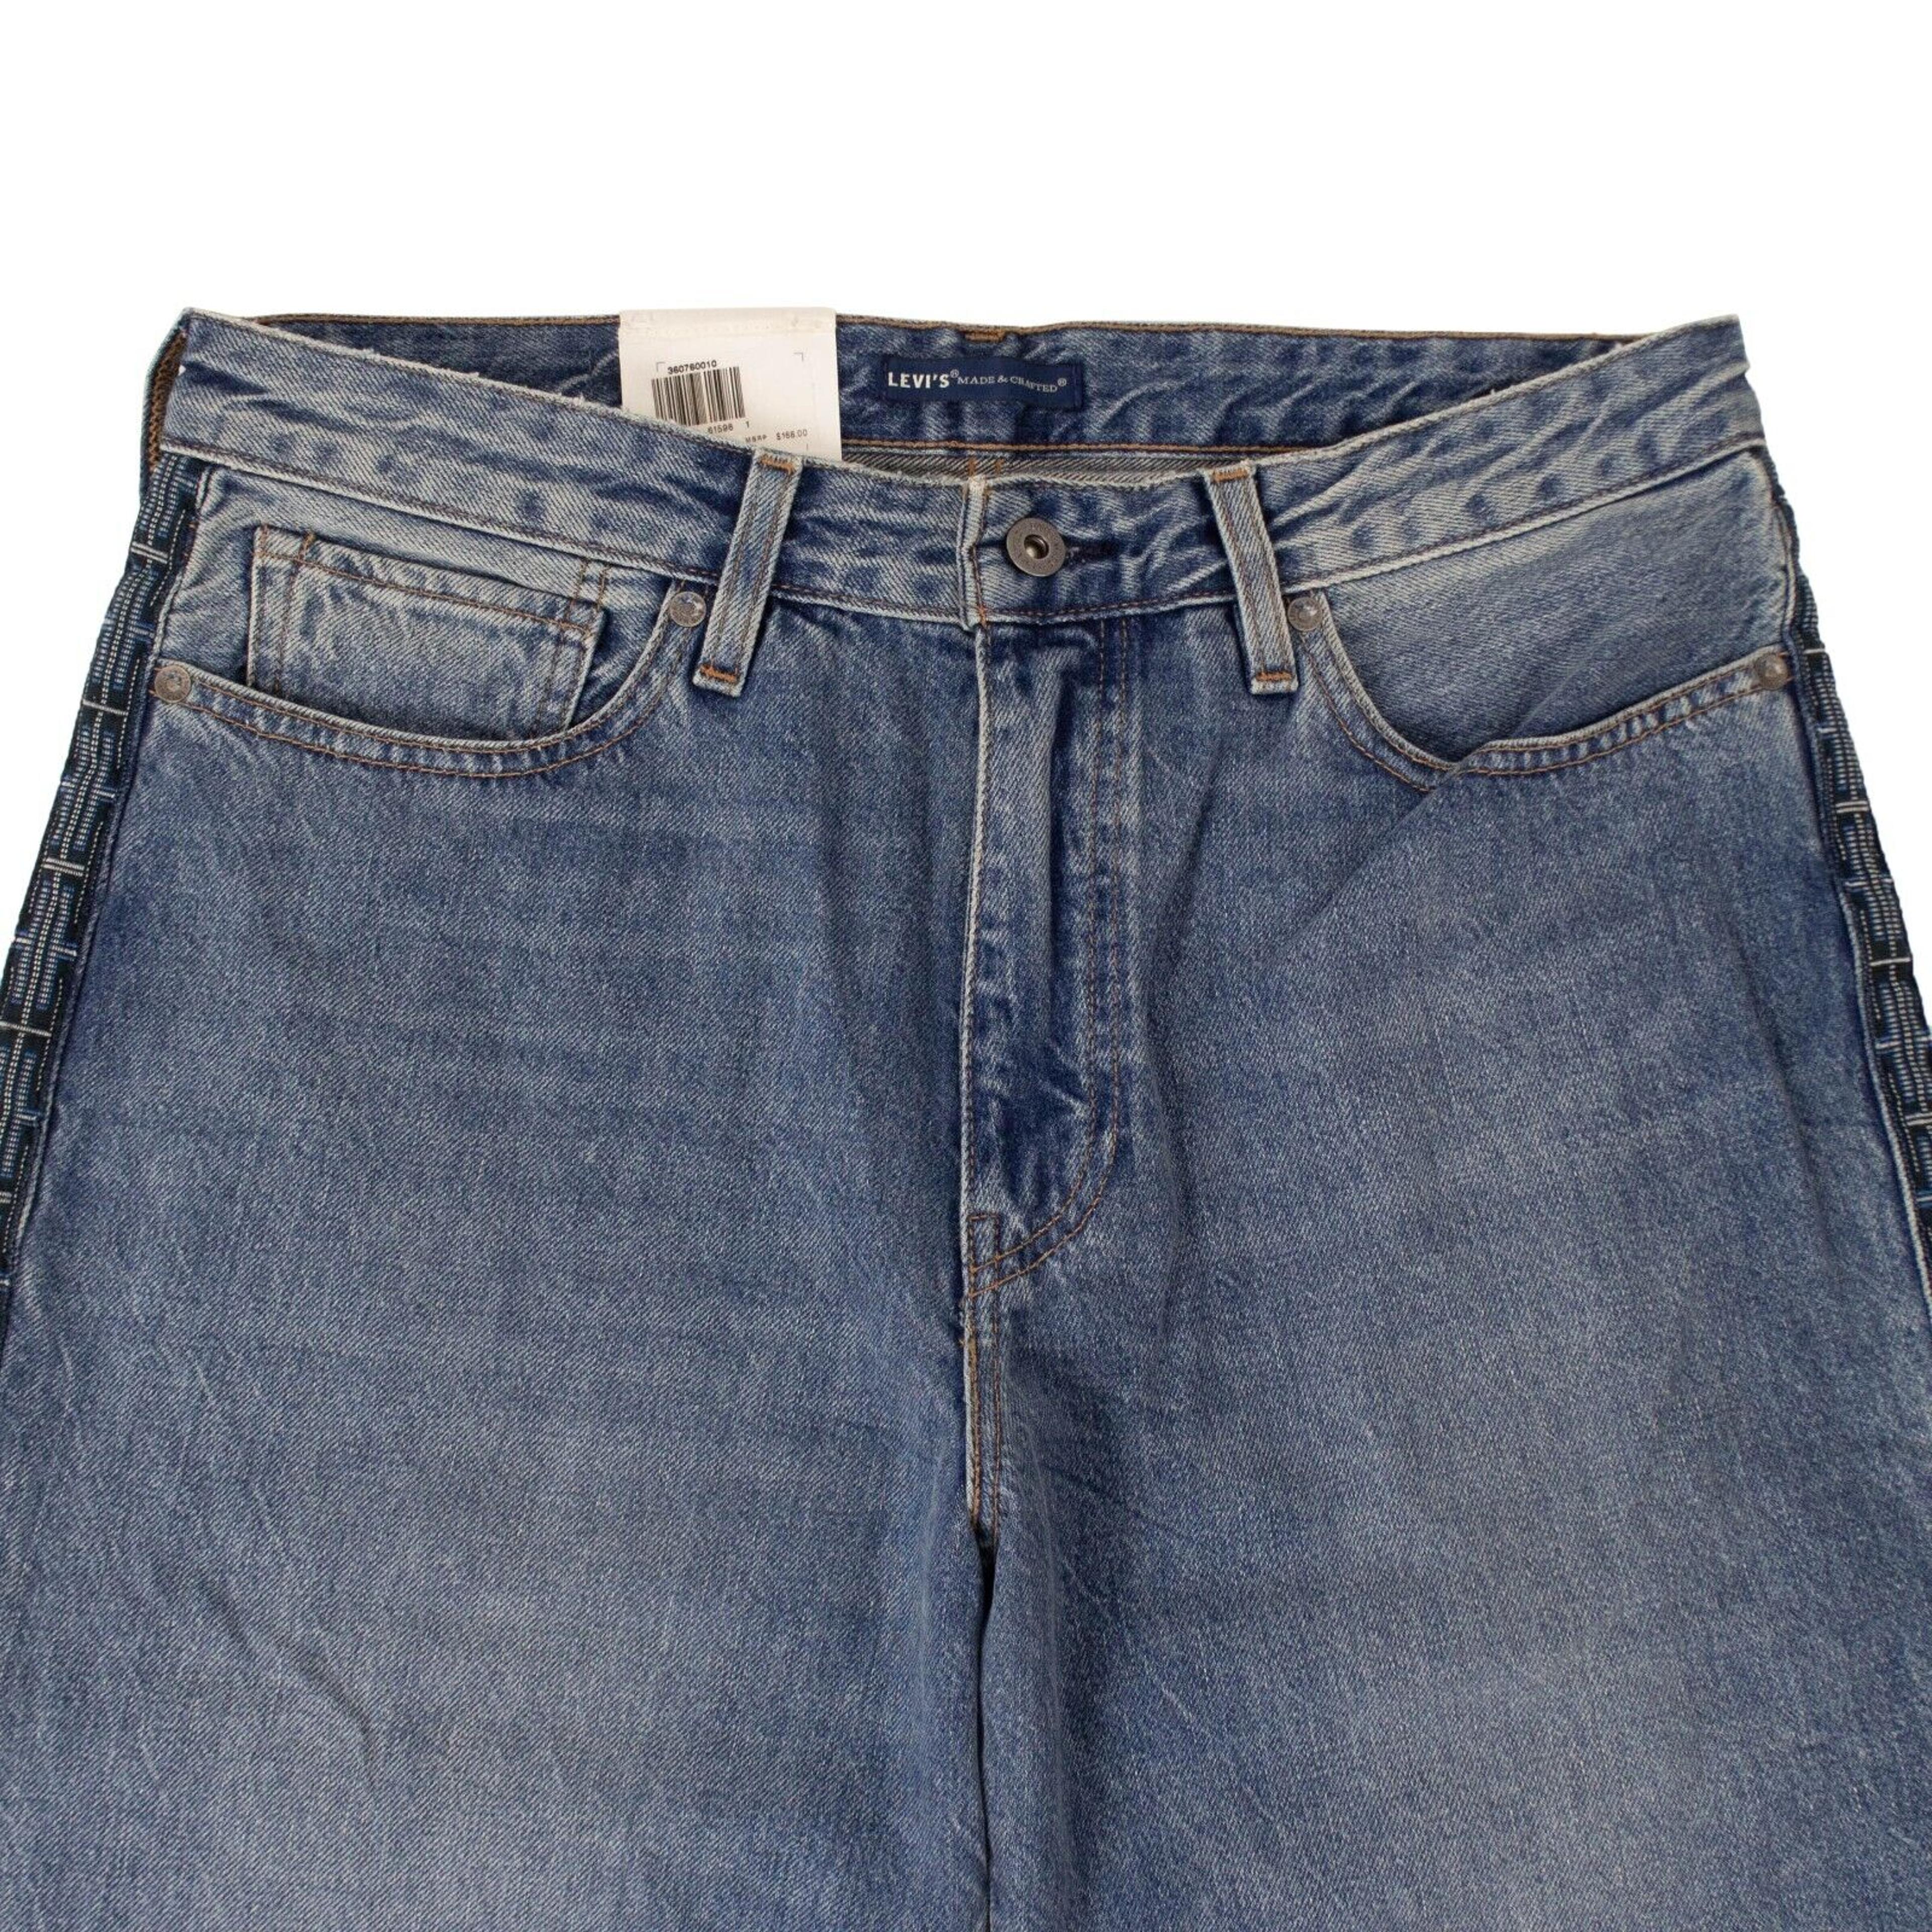 Alternate View 1 of Blue Draft Taper Side Stripe Jeans